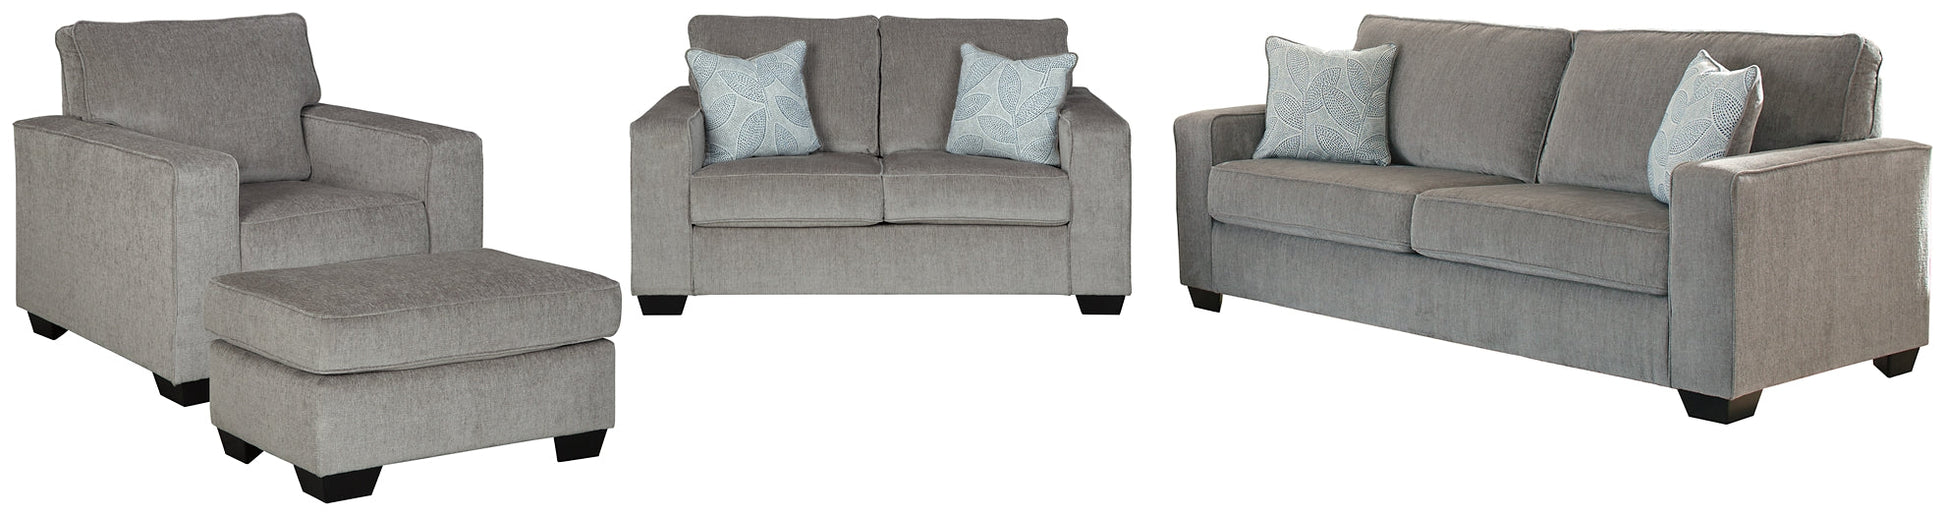 Altari Sofa, Loveseat, Chair and Ottoman at Towne & Country Furniture (AL) furniture, home furniture, home decor, sofa, bedding